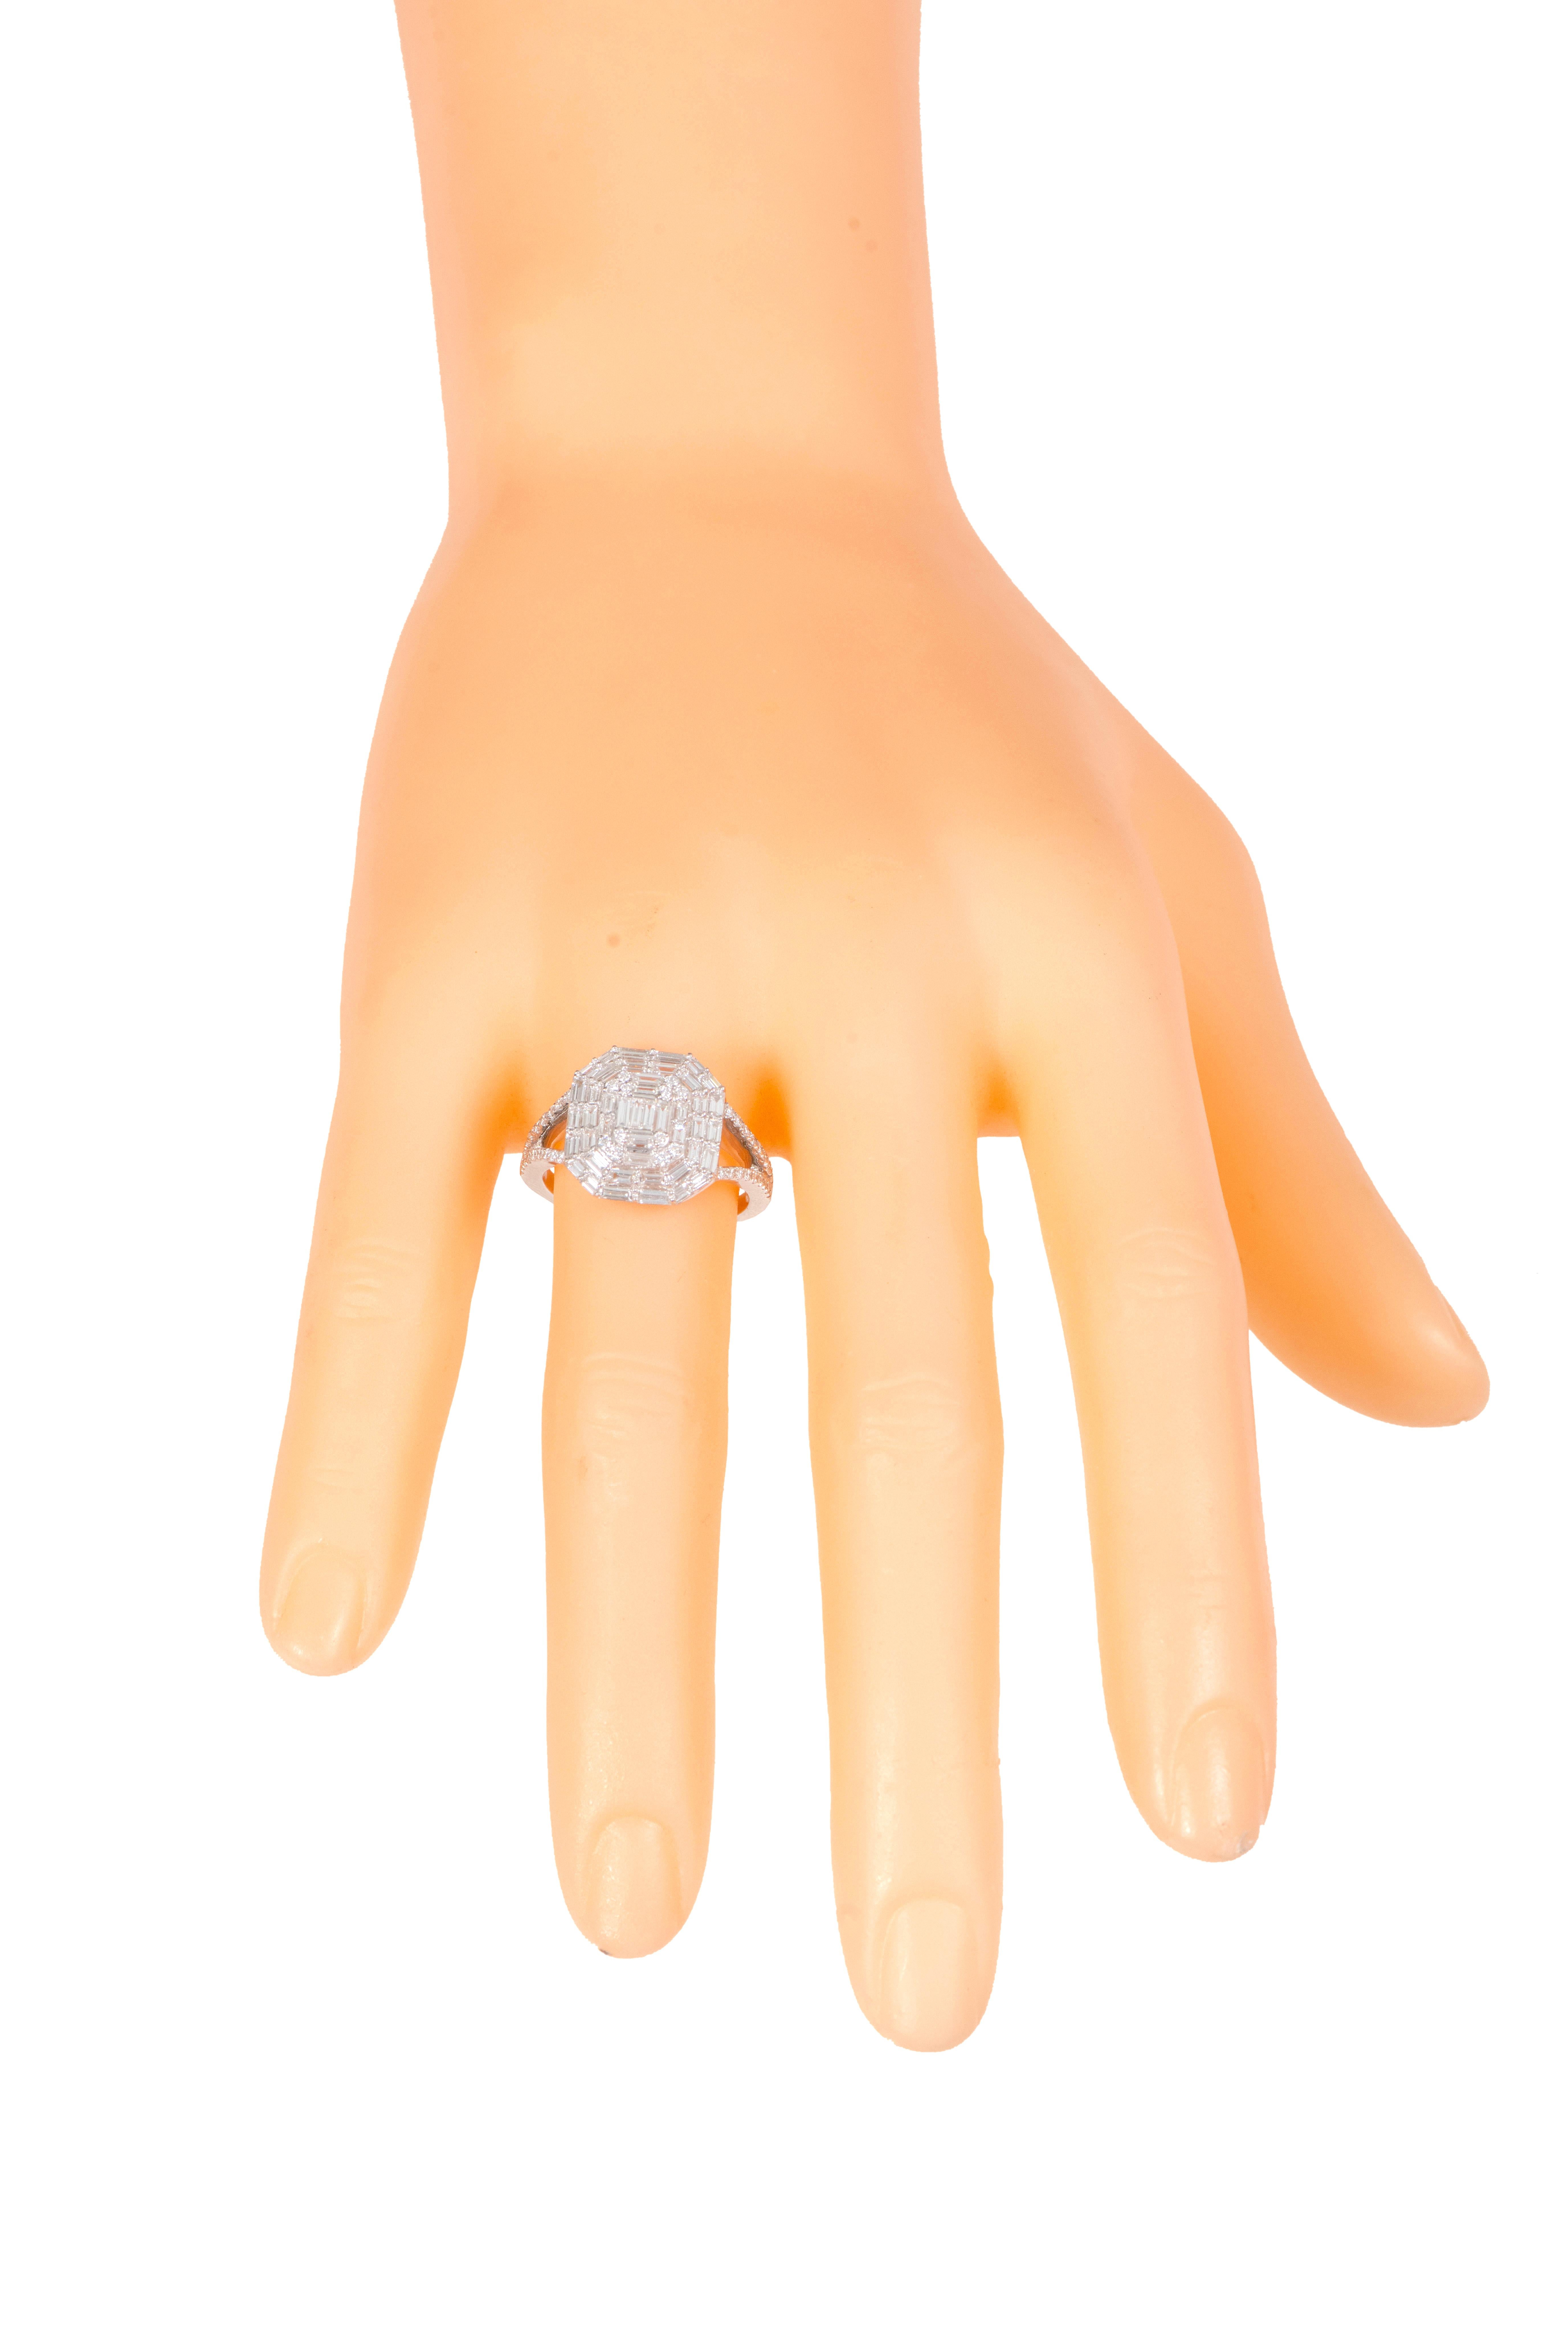 Baguette Cut 18 Karat White Gold 1.12 Carat Diamond Contemporary-Style Ring For Sale